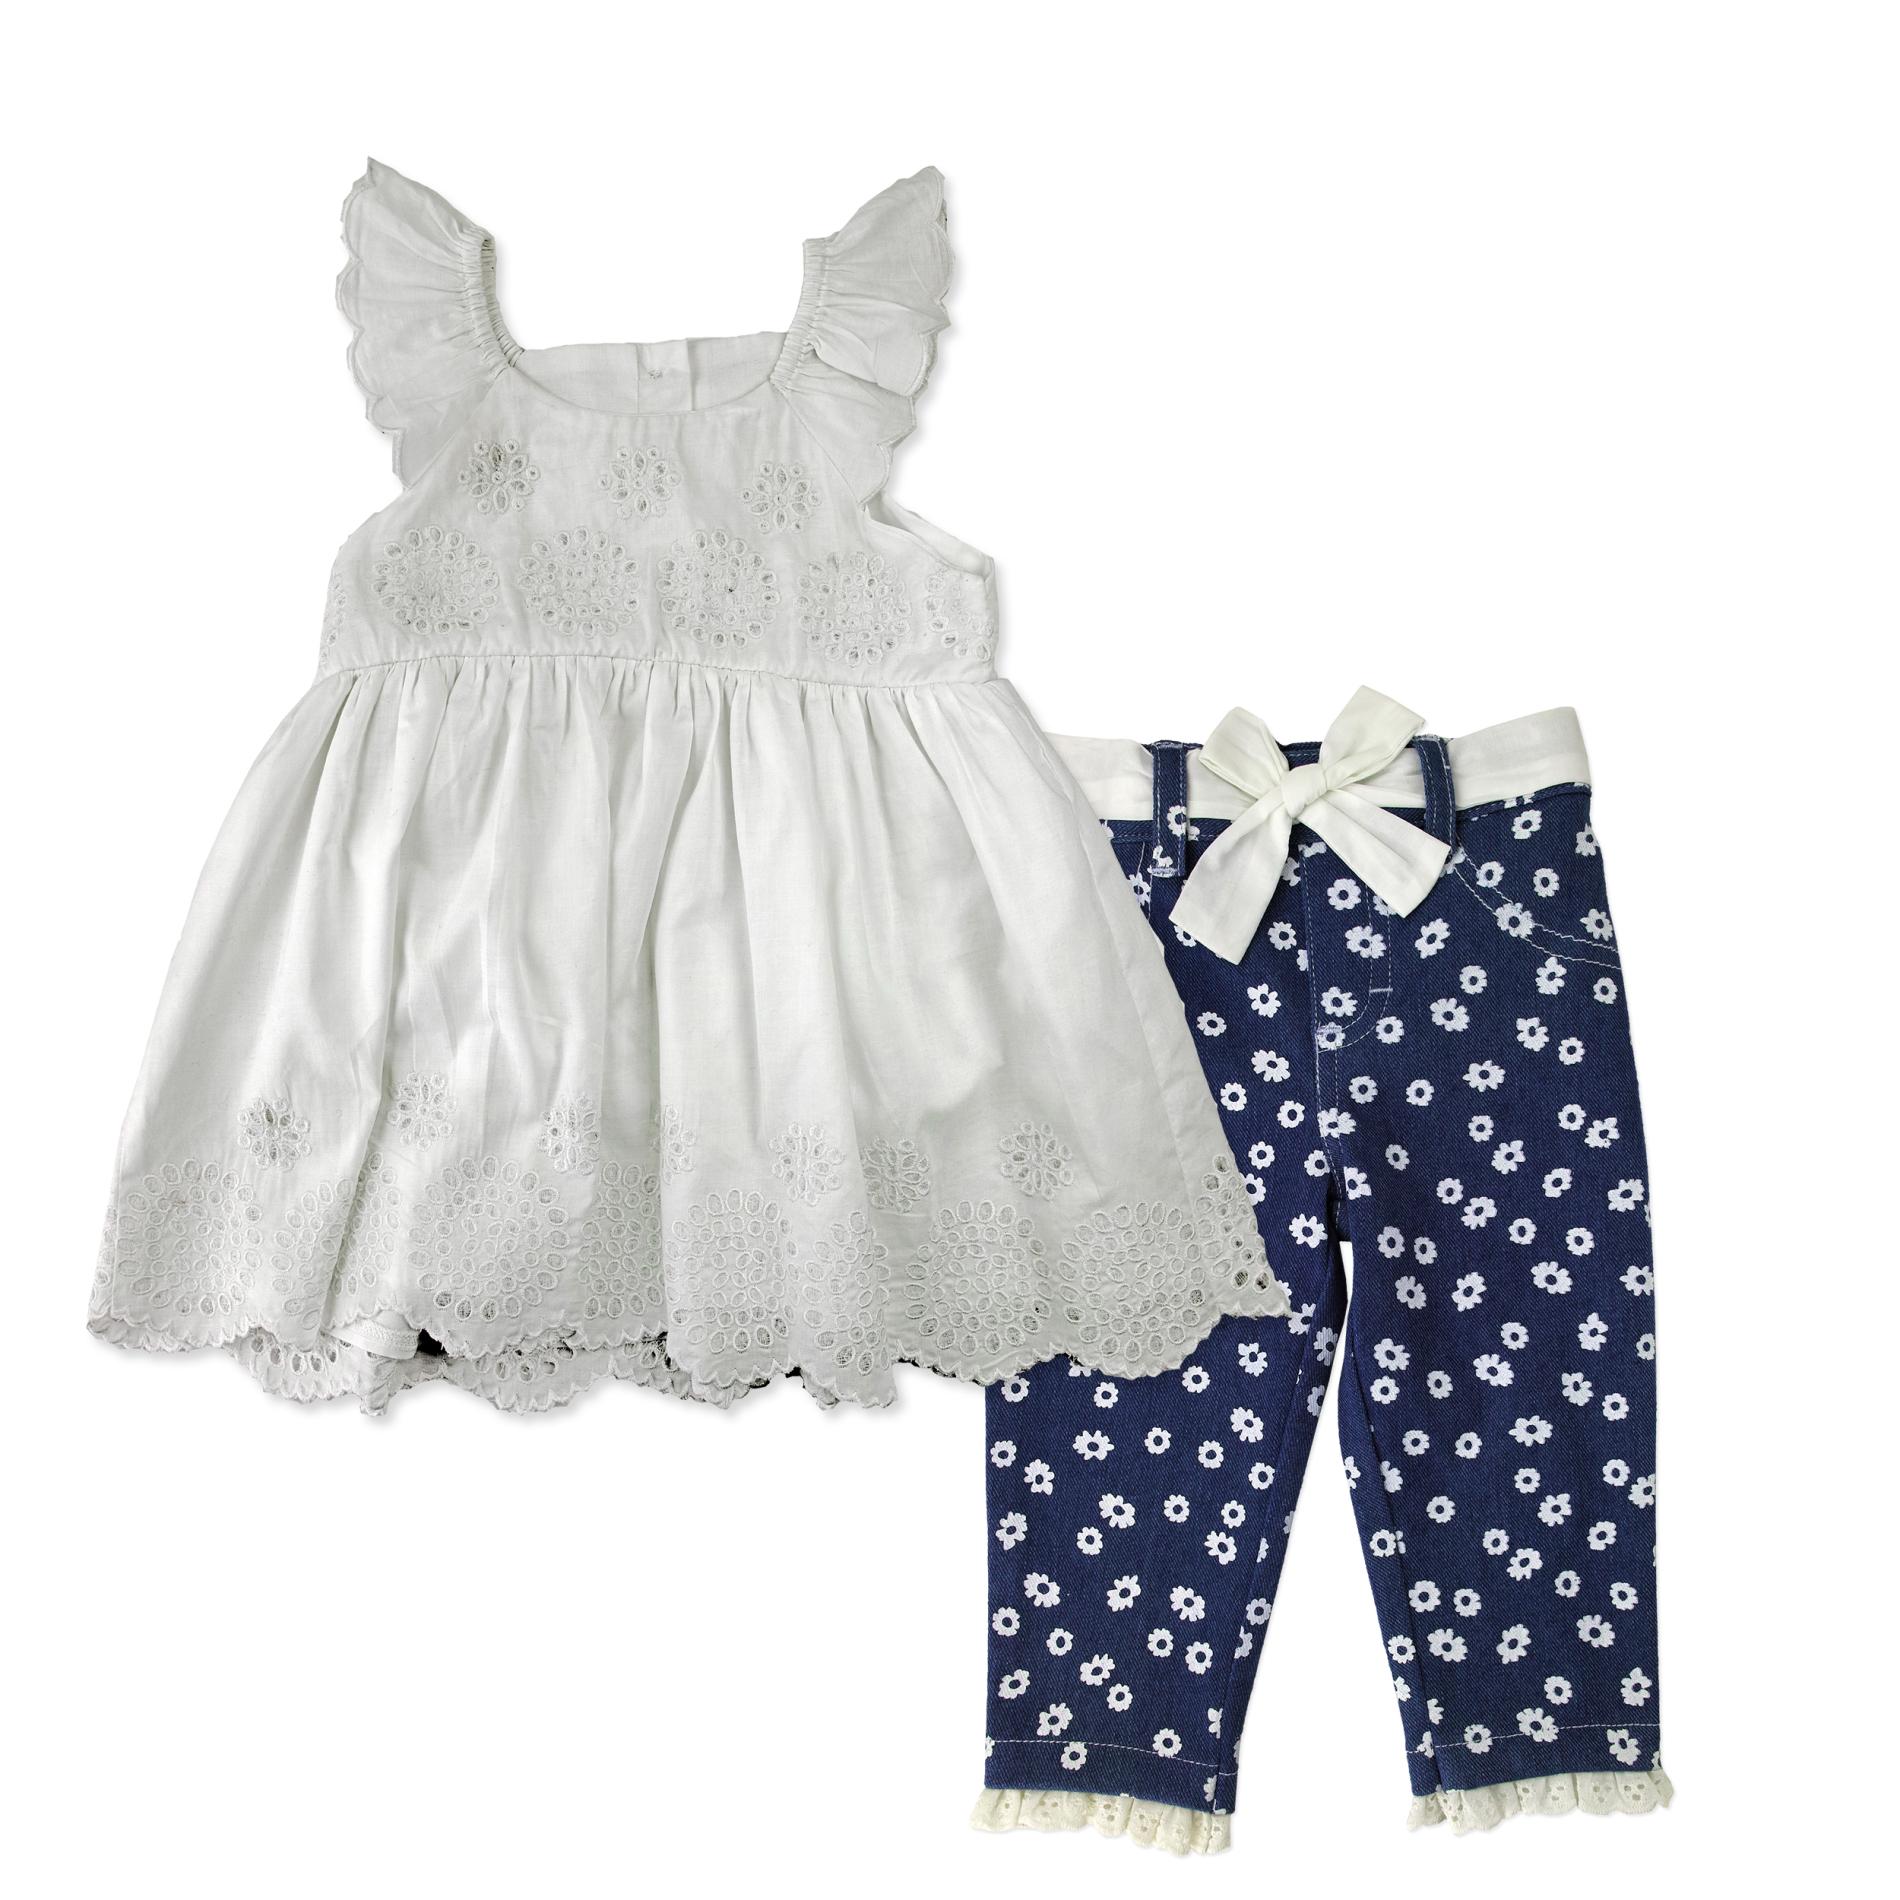 Nanette Infant & Toddler Girls' Tunic Top & Pants - Floral